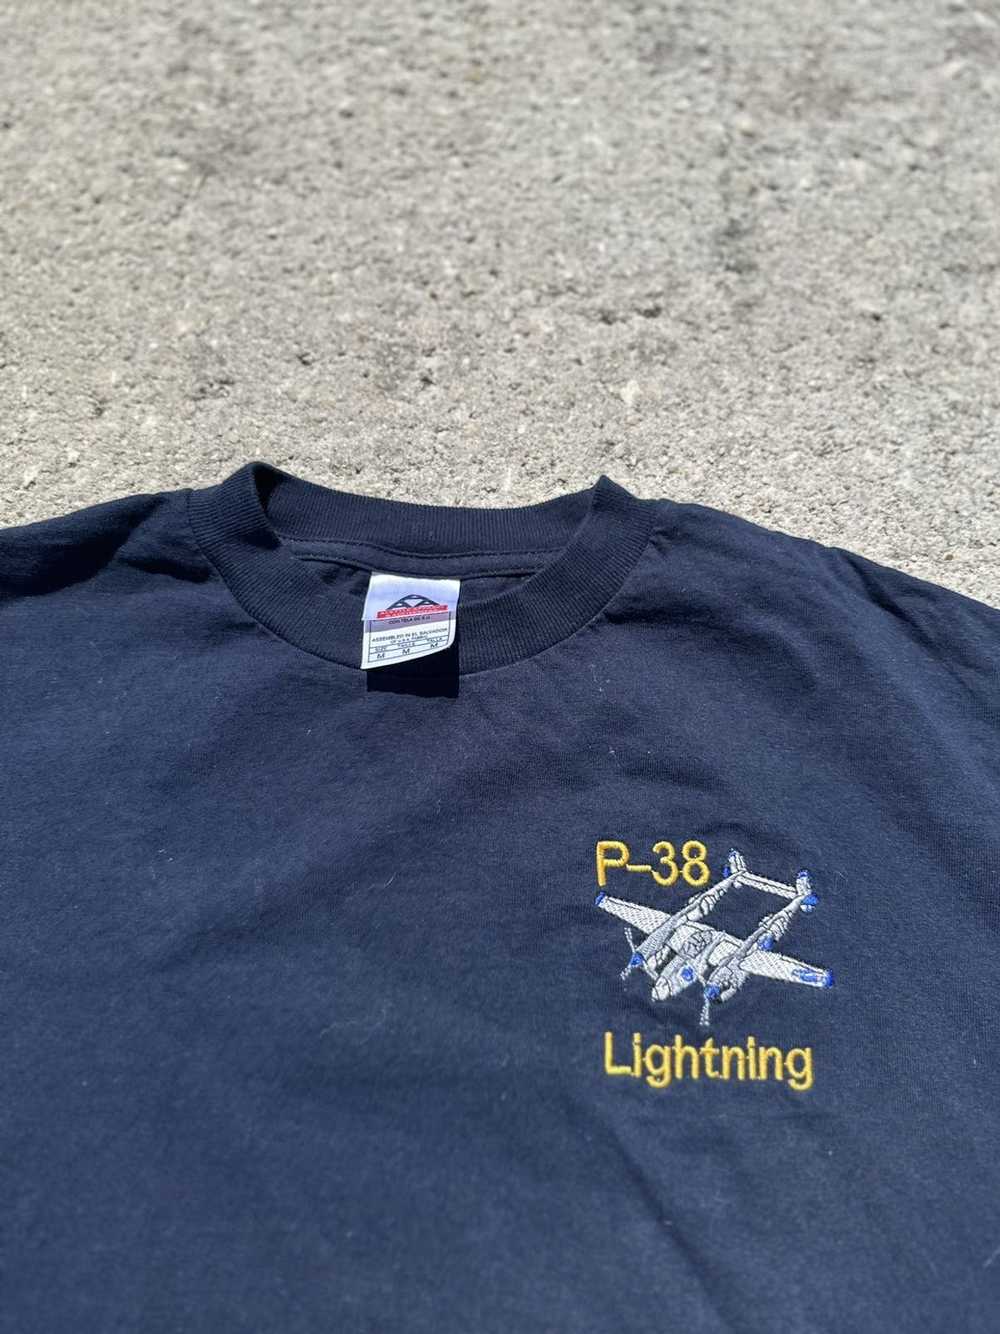 Streetwear P-38 airplane lightning tee aerospace - image 4